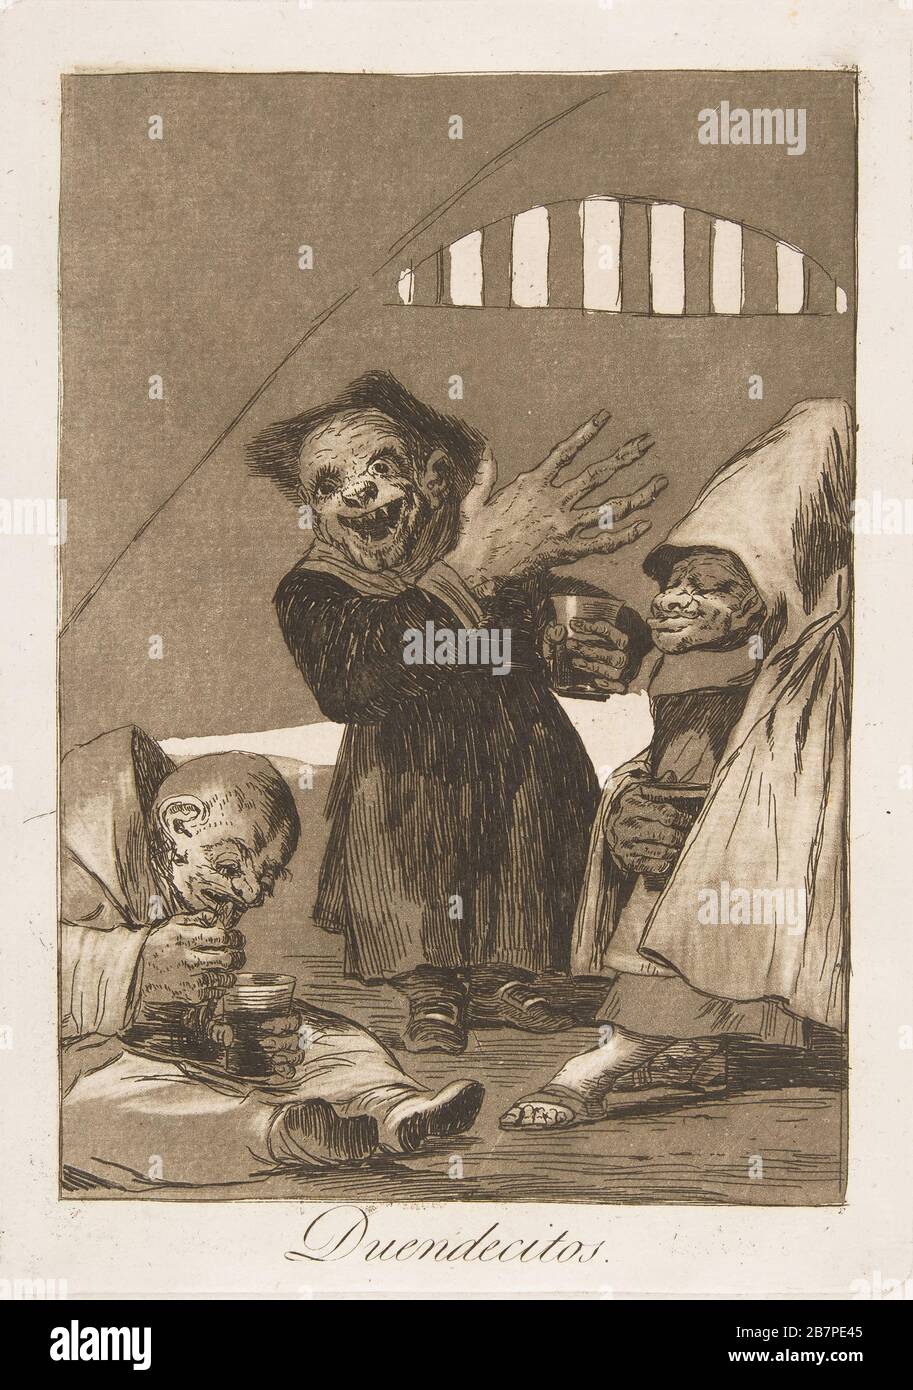 Plate 49 from 'Los Caprichos': Hobgoblins (Duendecitos.), 1799. Stock Photo